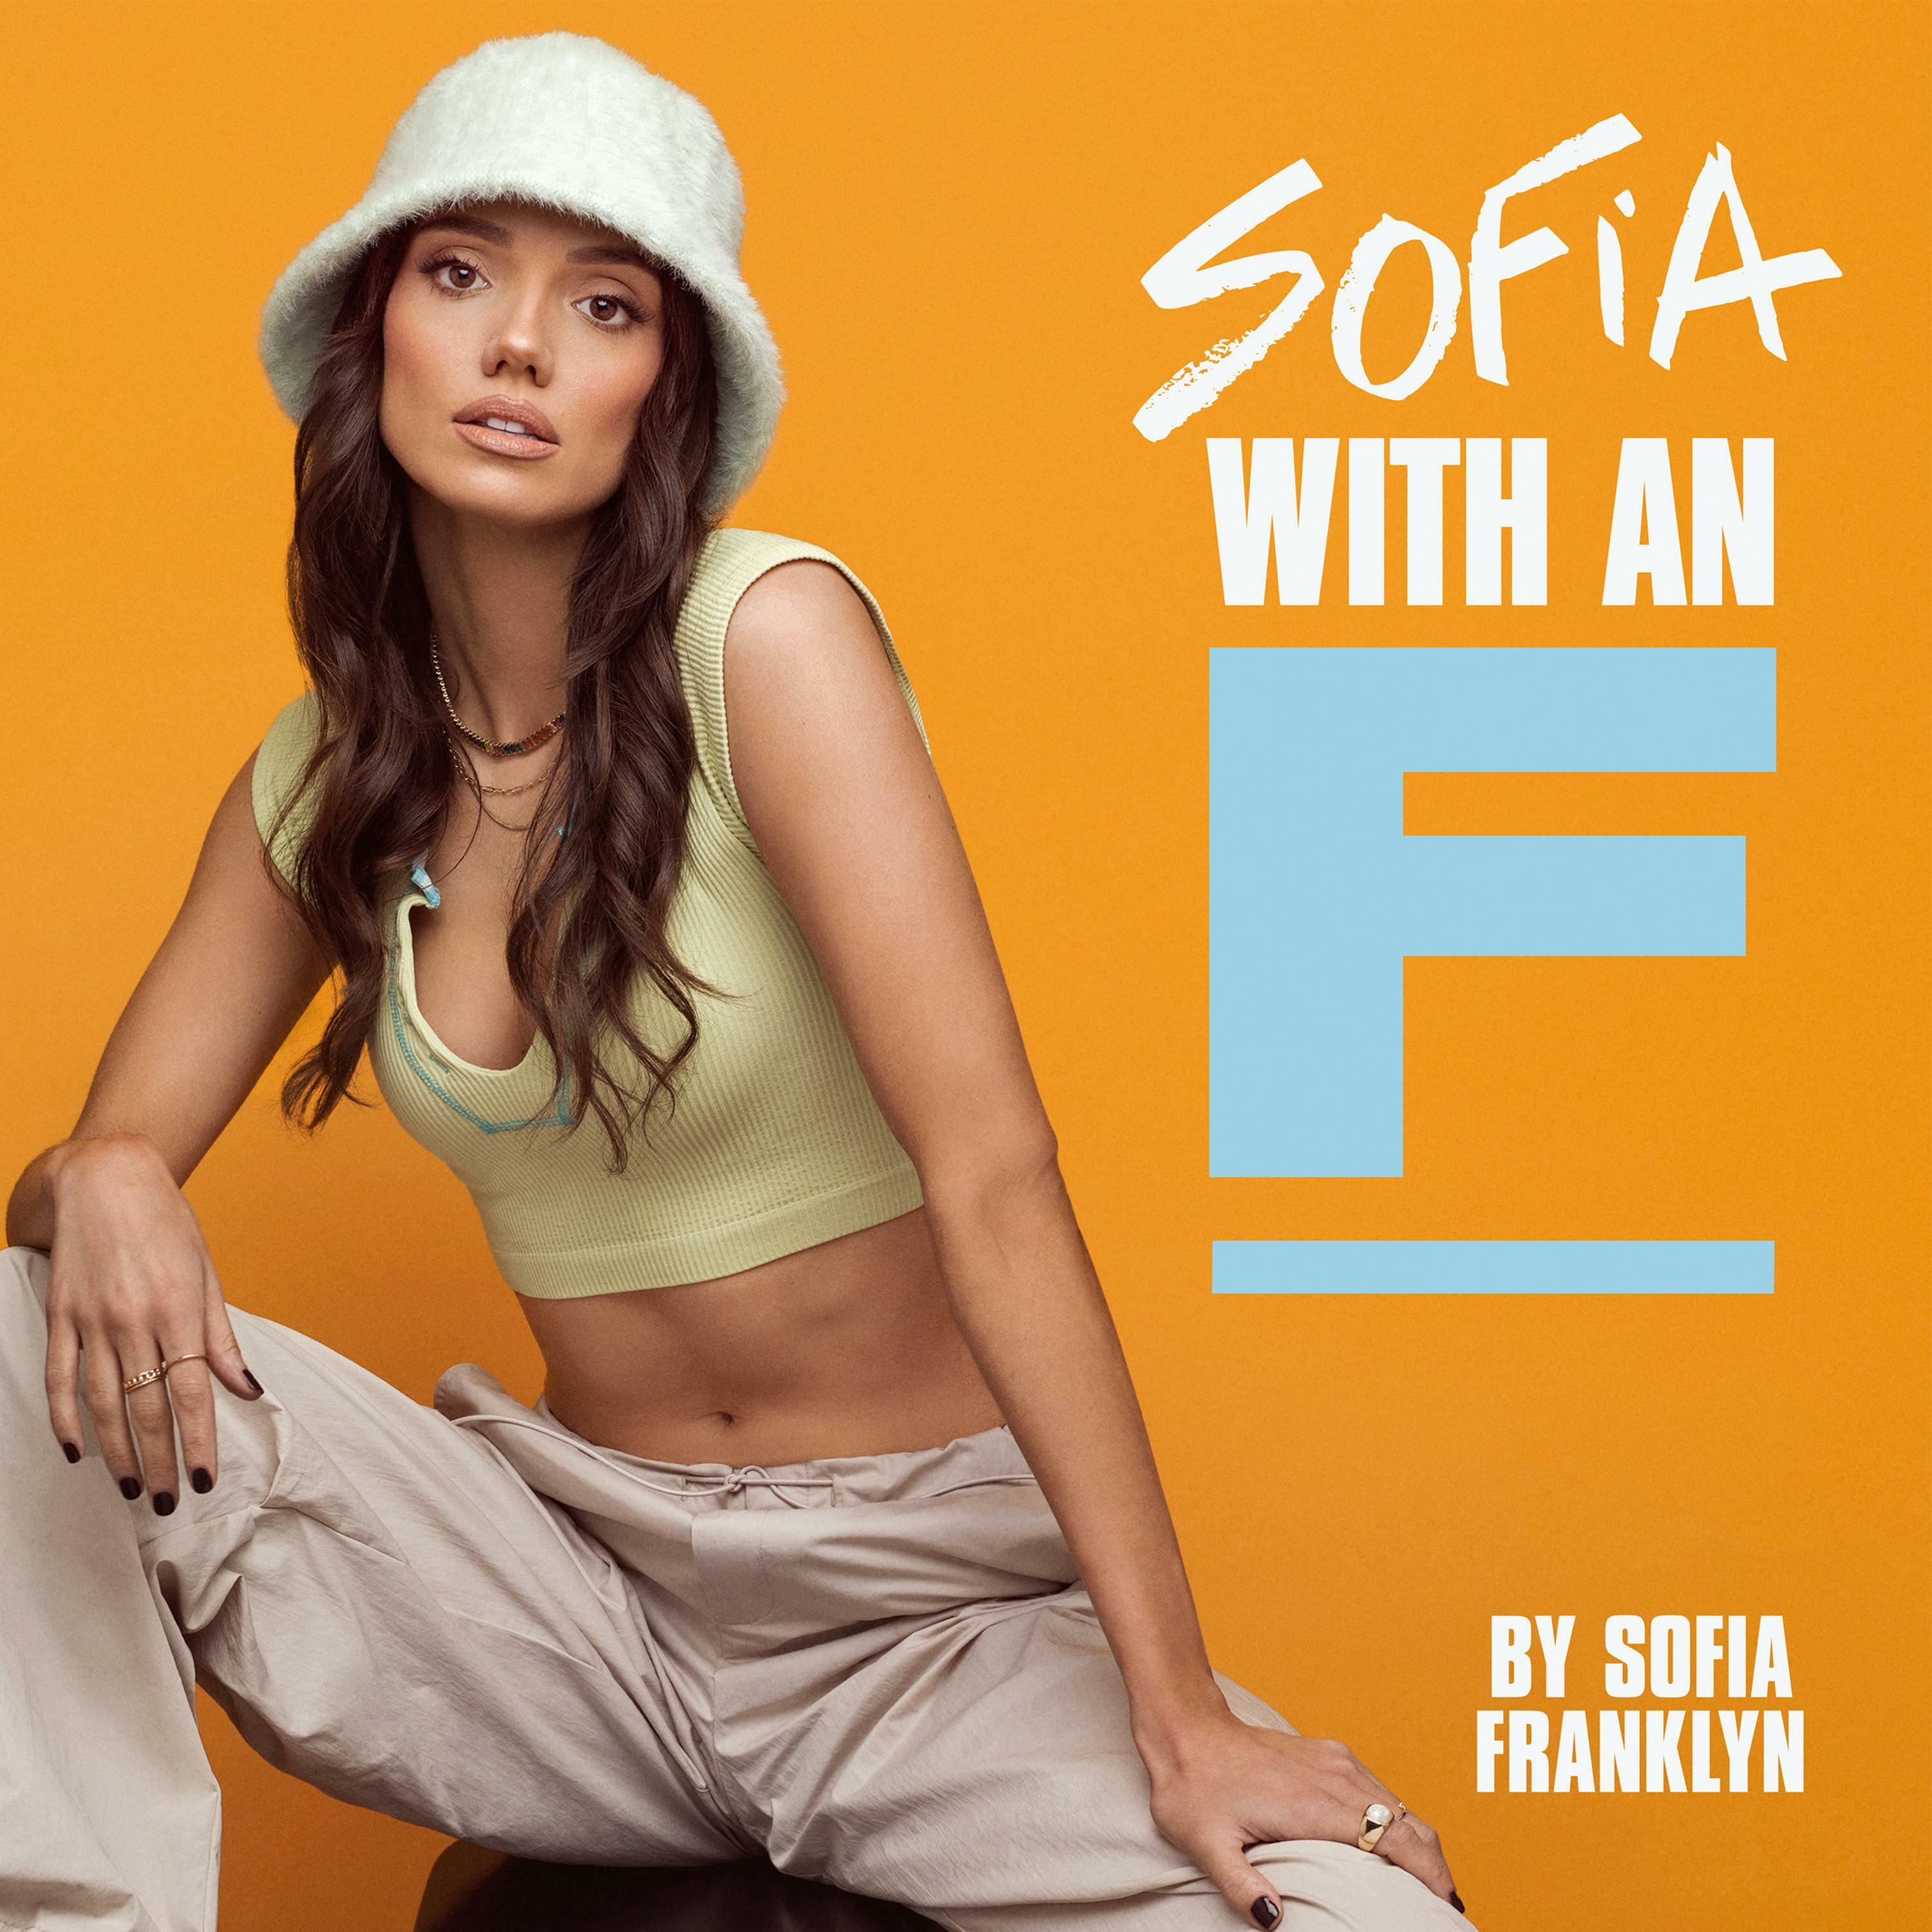 Disney Sofia The First Porn - Sofia with an F | iHeart